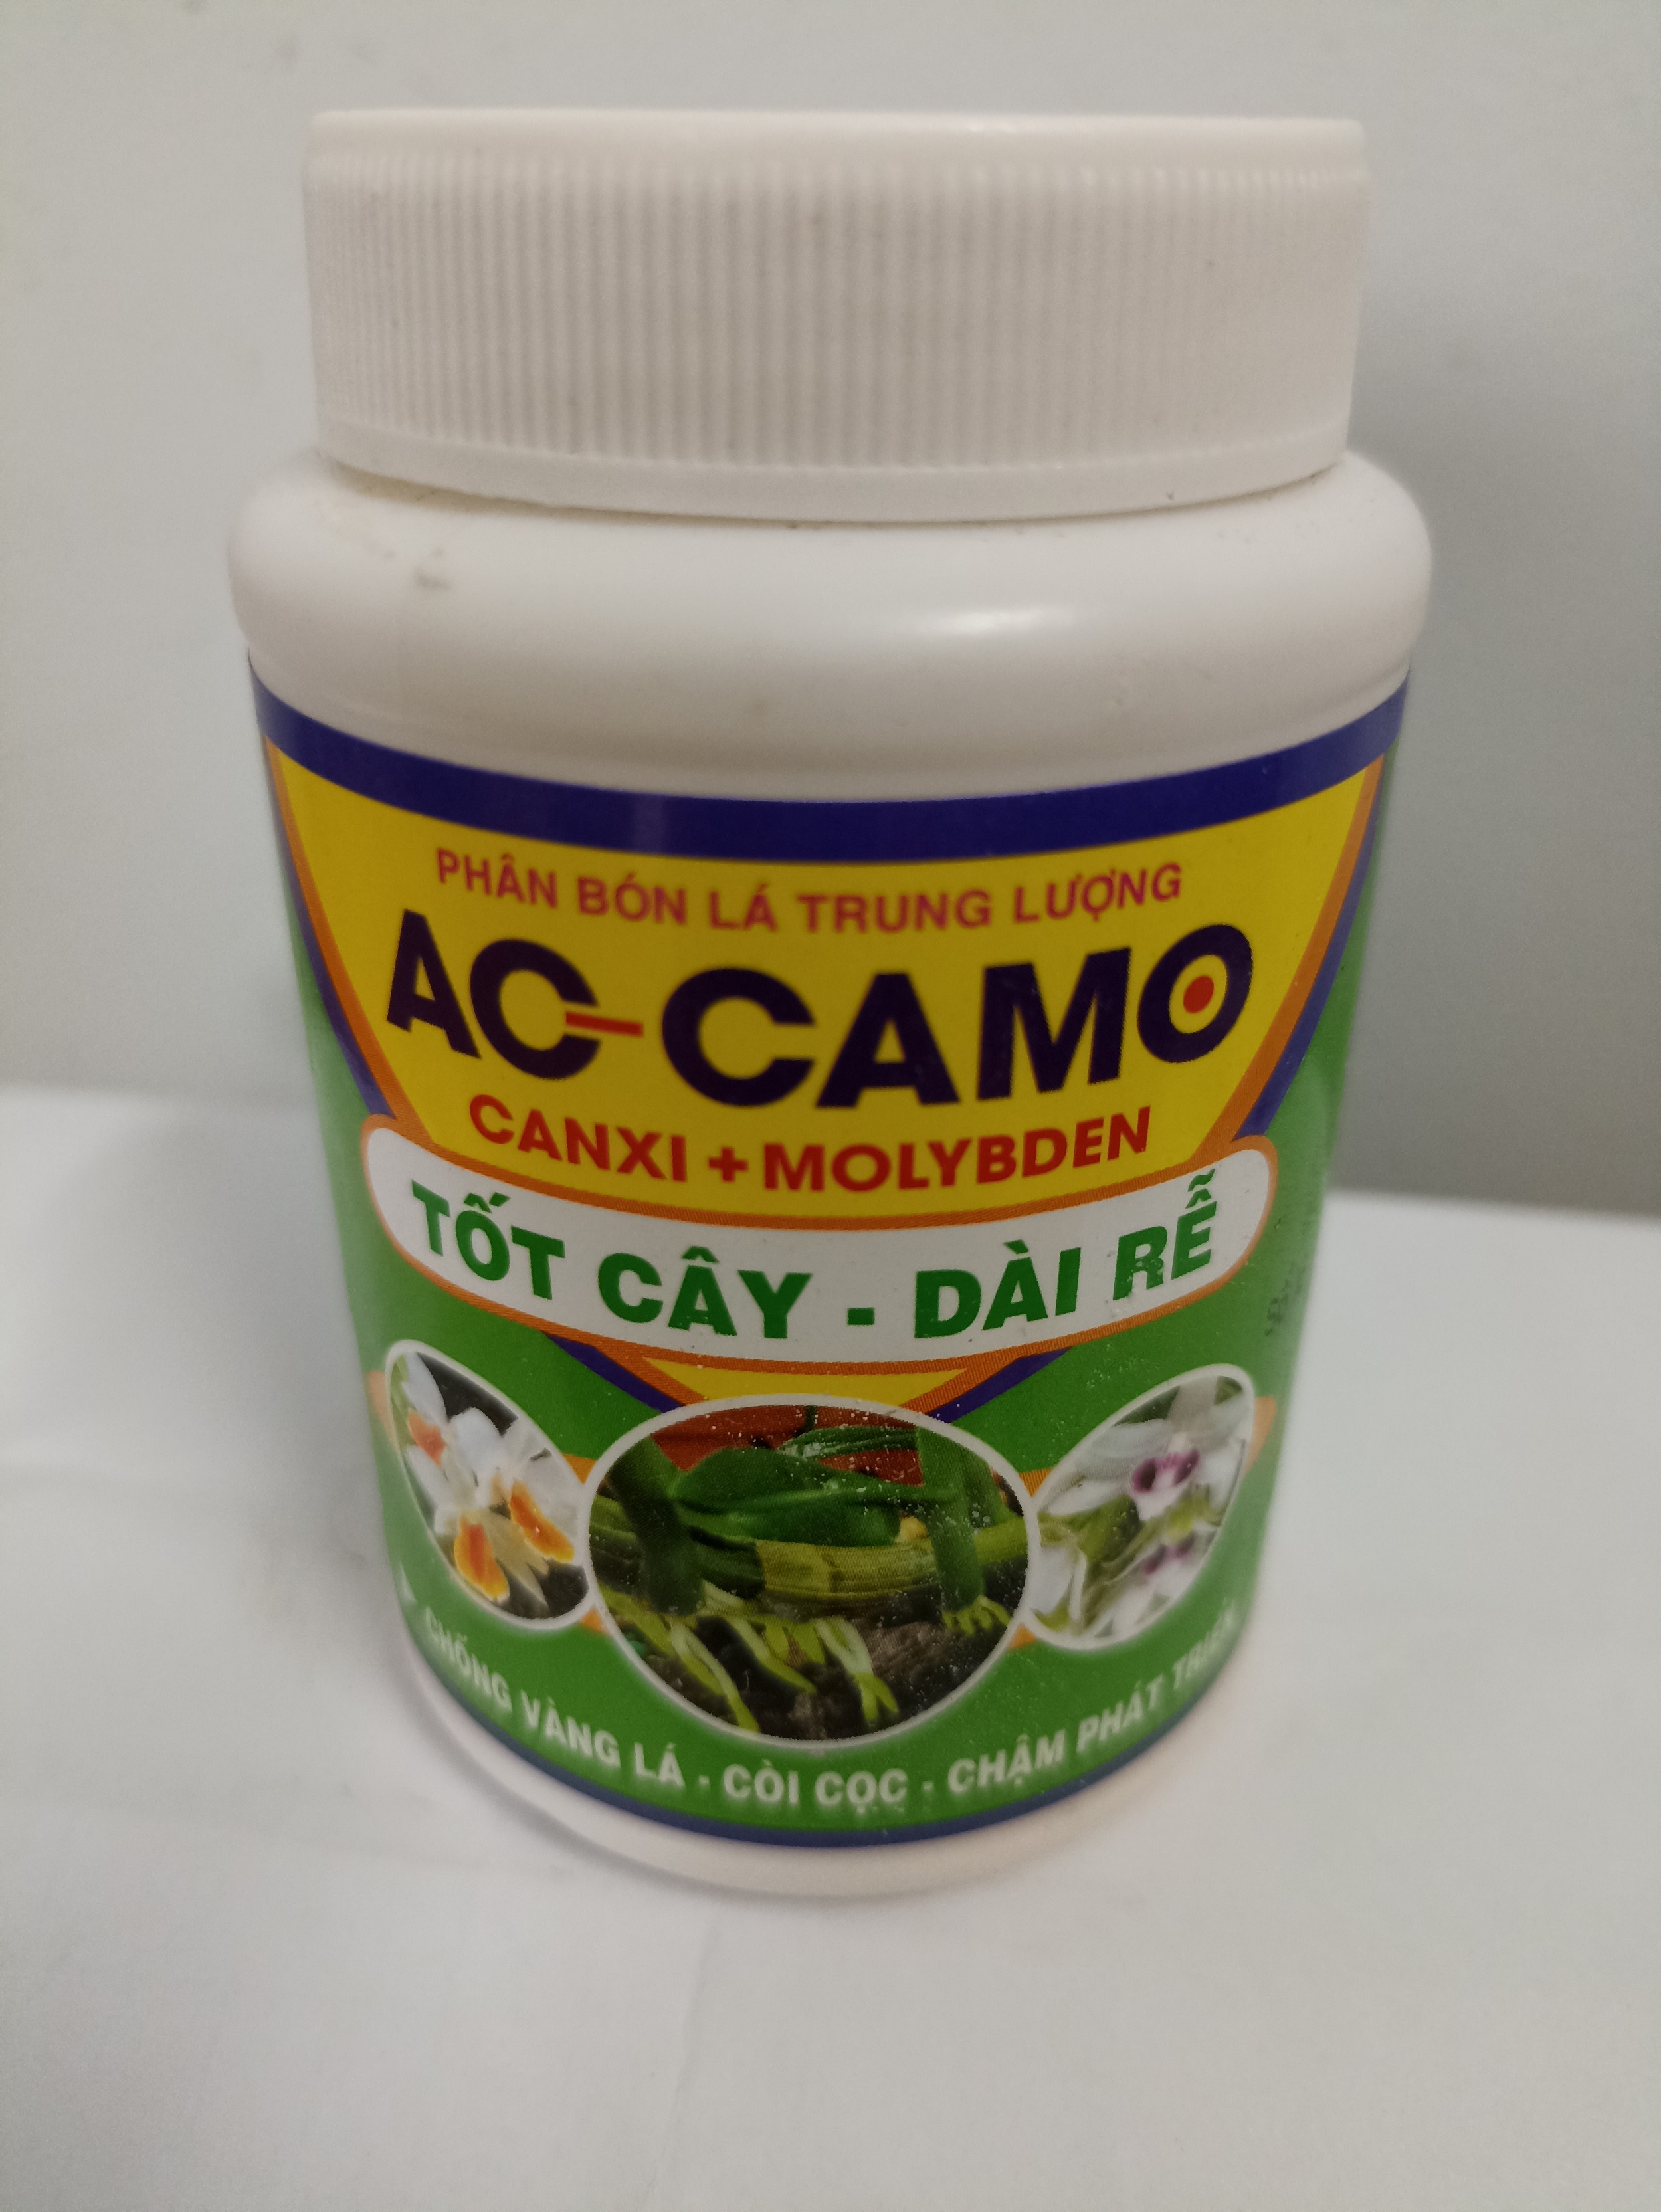 Phân bón lá AC - CAMO bổ sung Ca +Molybden tốt cây dài rễ - chai 100 gram